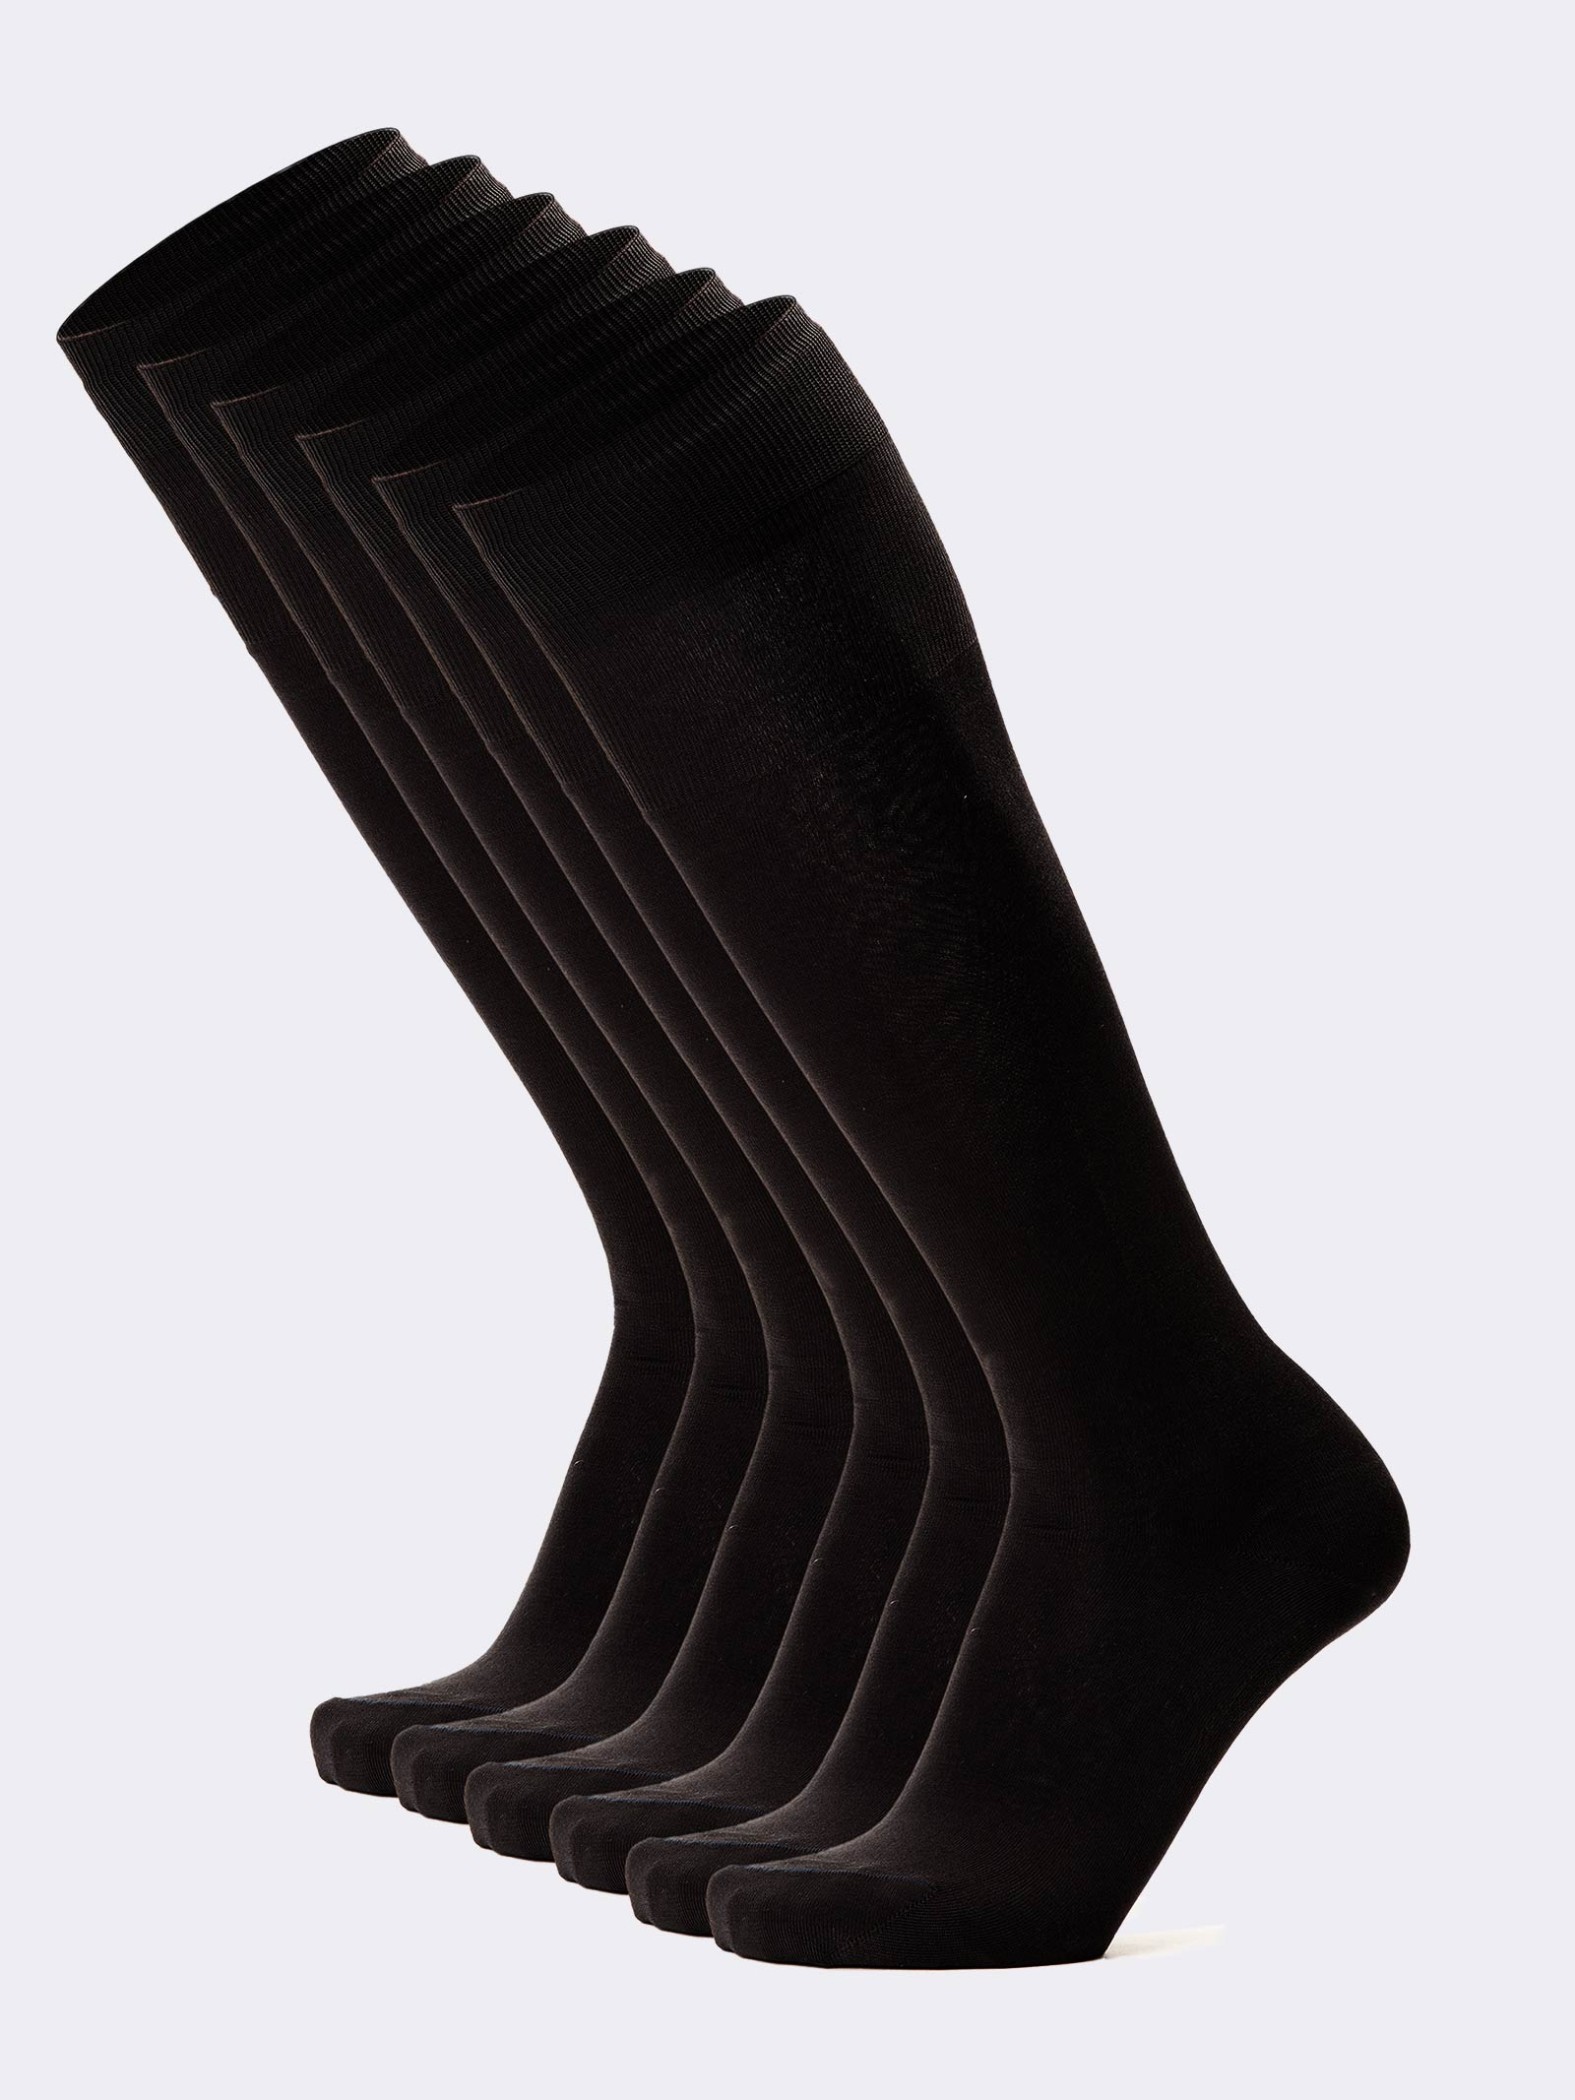 Six pairs of men's long socks in Filo di Scozia Cotton - Classic Colors